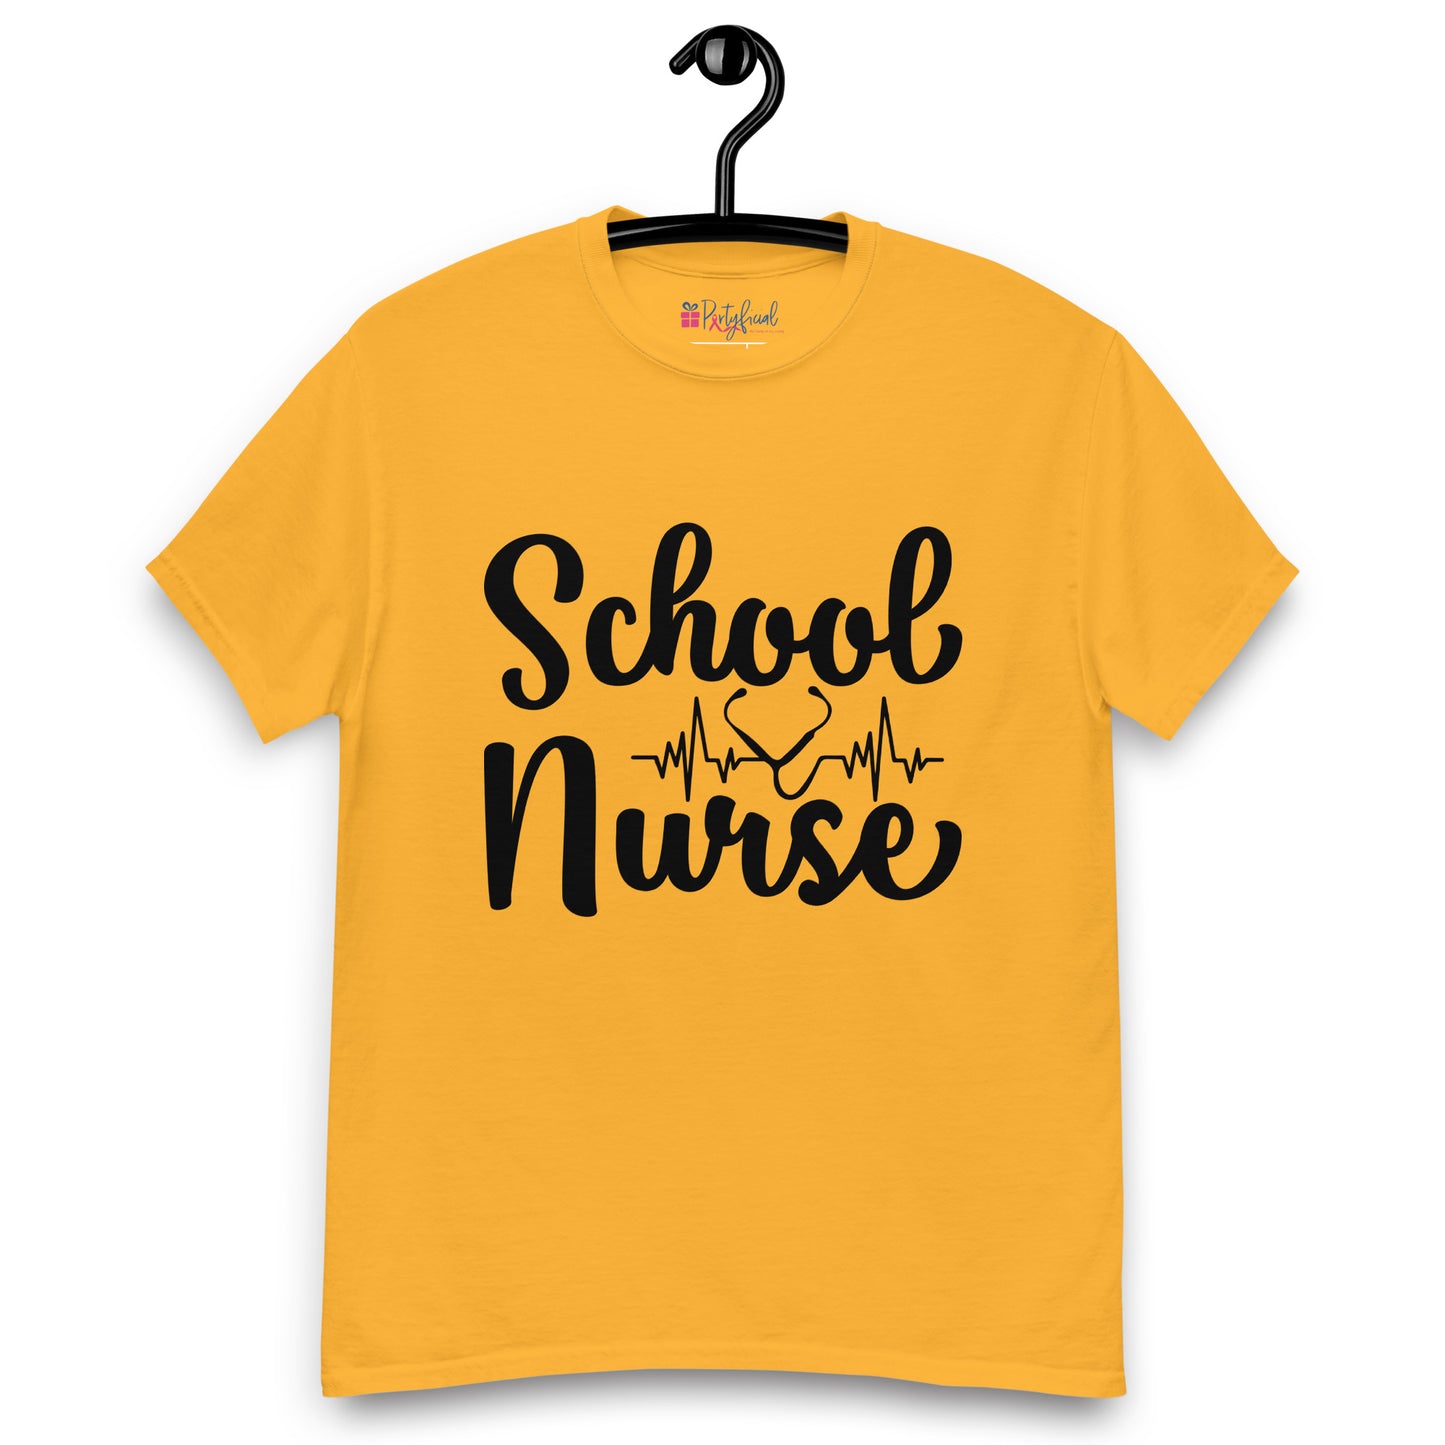 School Nurse tee